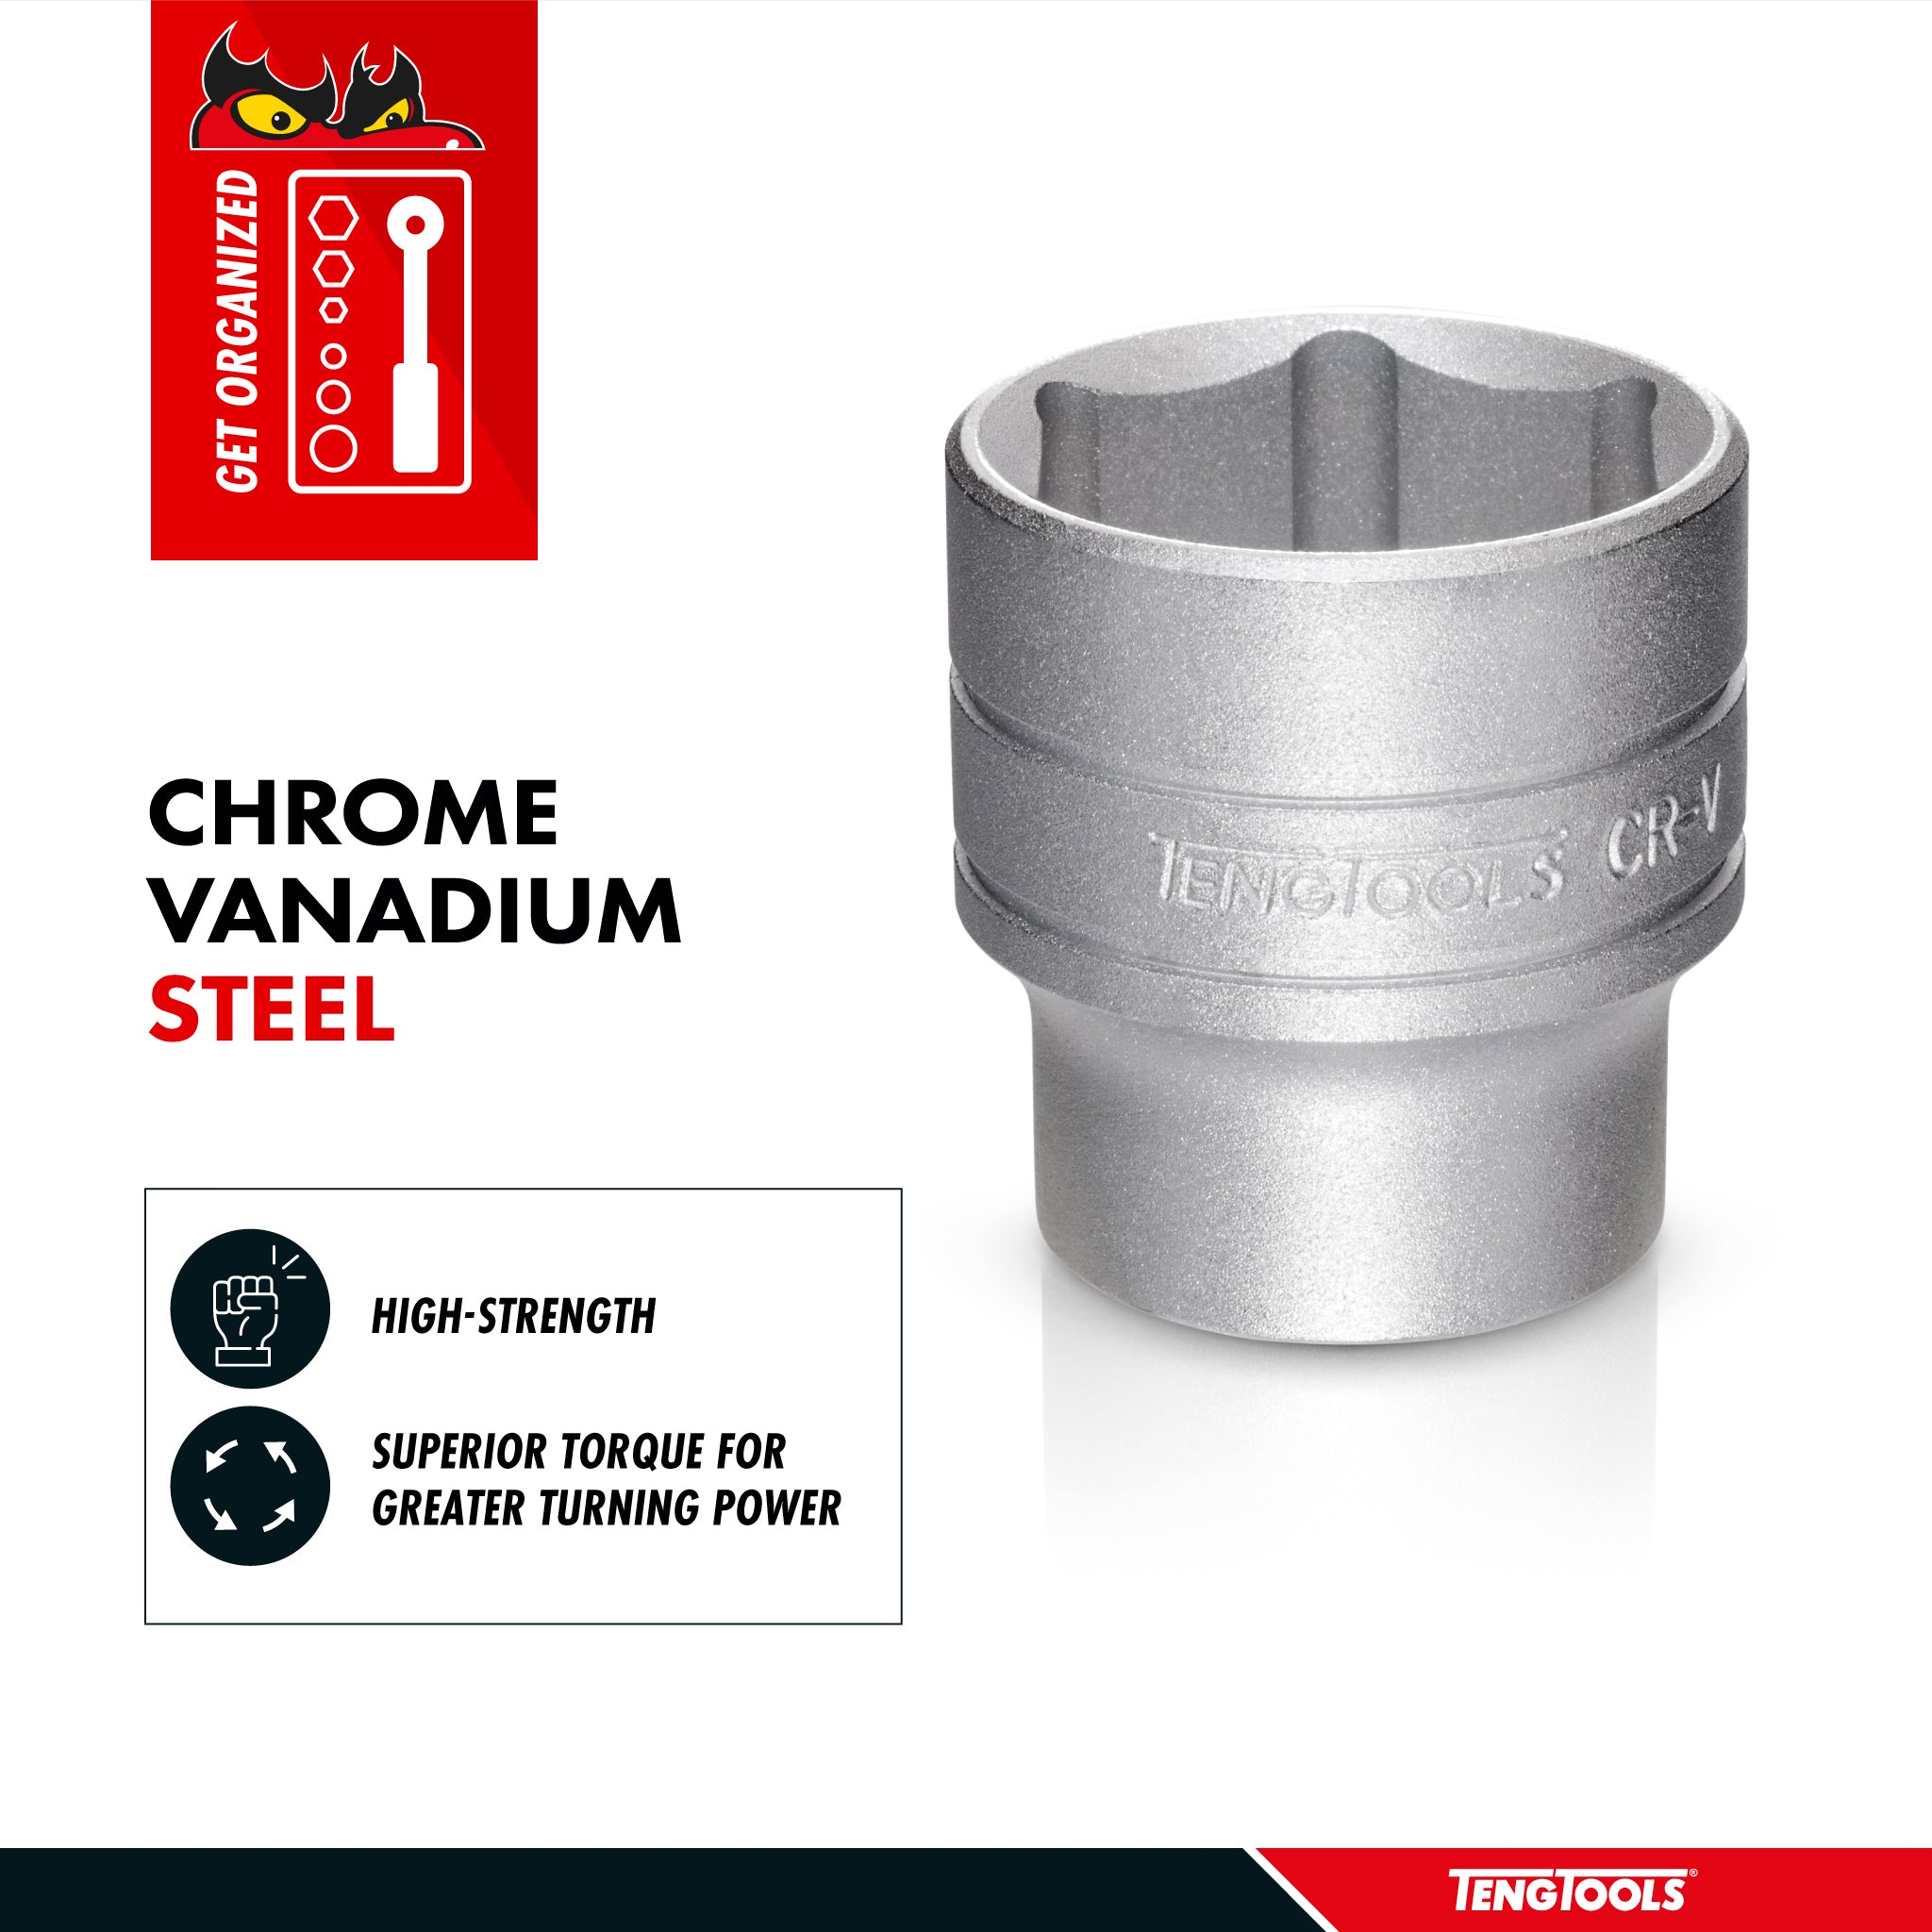 Teng Tools 1/2 Inch Drive 6 Point Metric Shallow Chrome Vanadium Sockets - 33mm